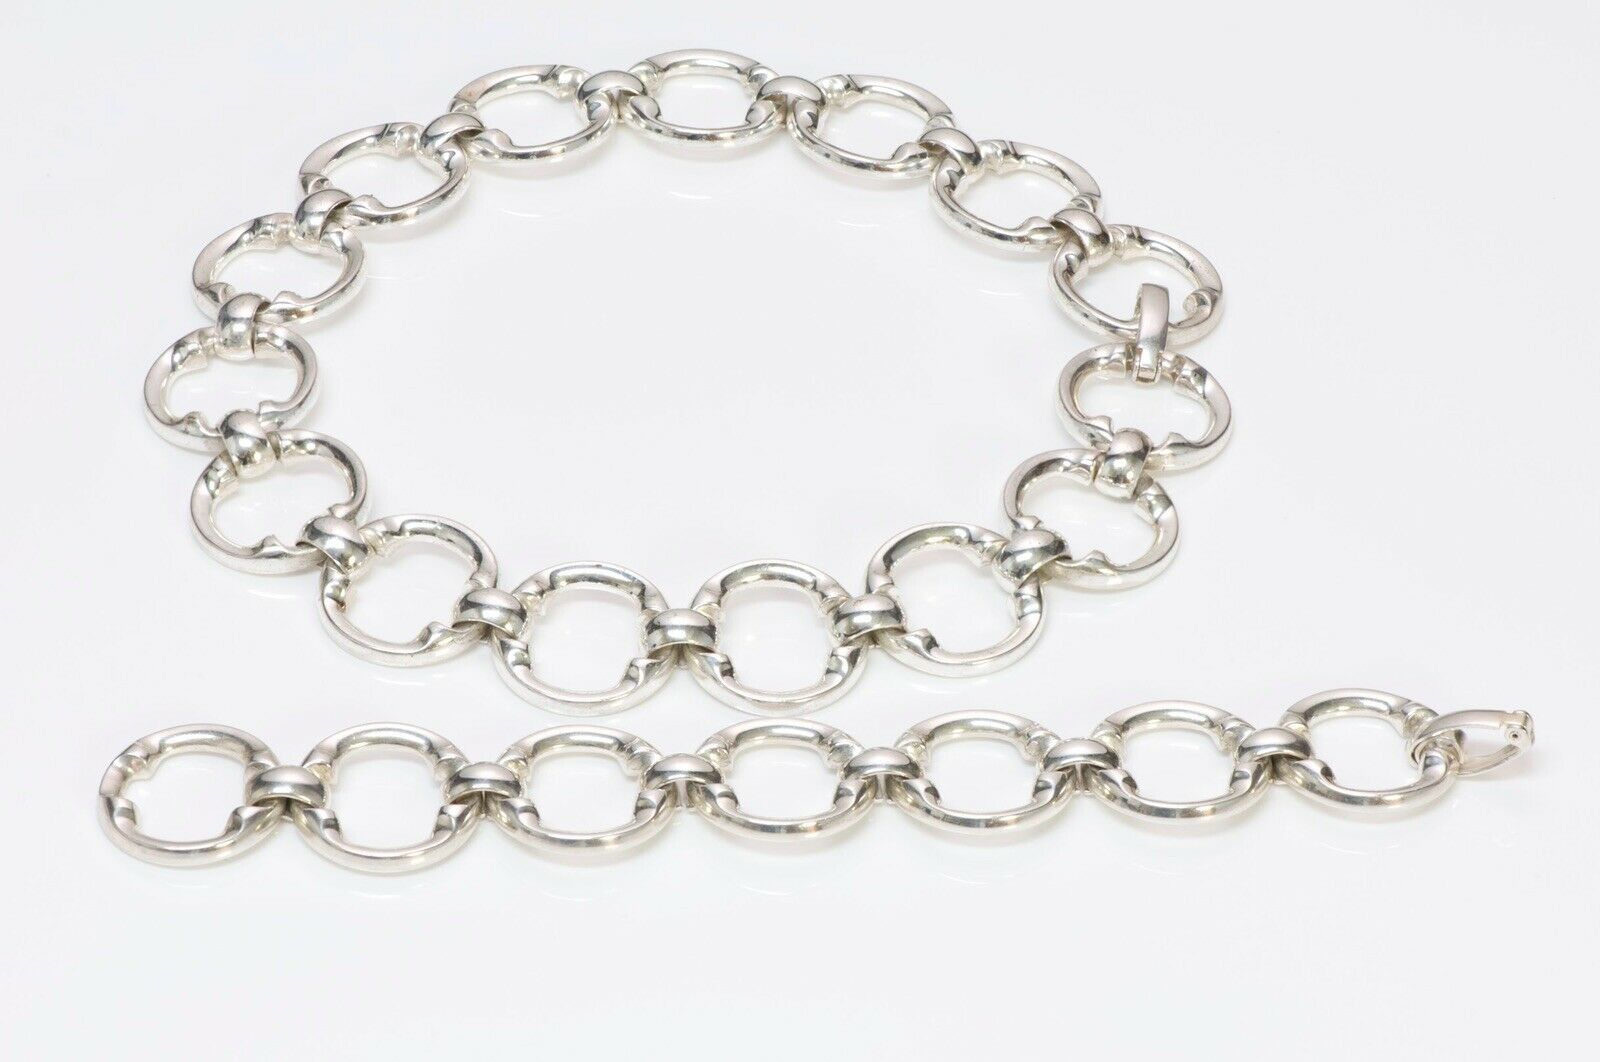 Christian DIOR Henkel & Grosse Sterling Silver Chain Link Necklace Bracelet Set - DSF Antique Jewelry